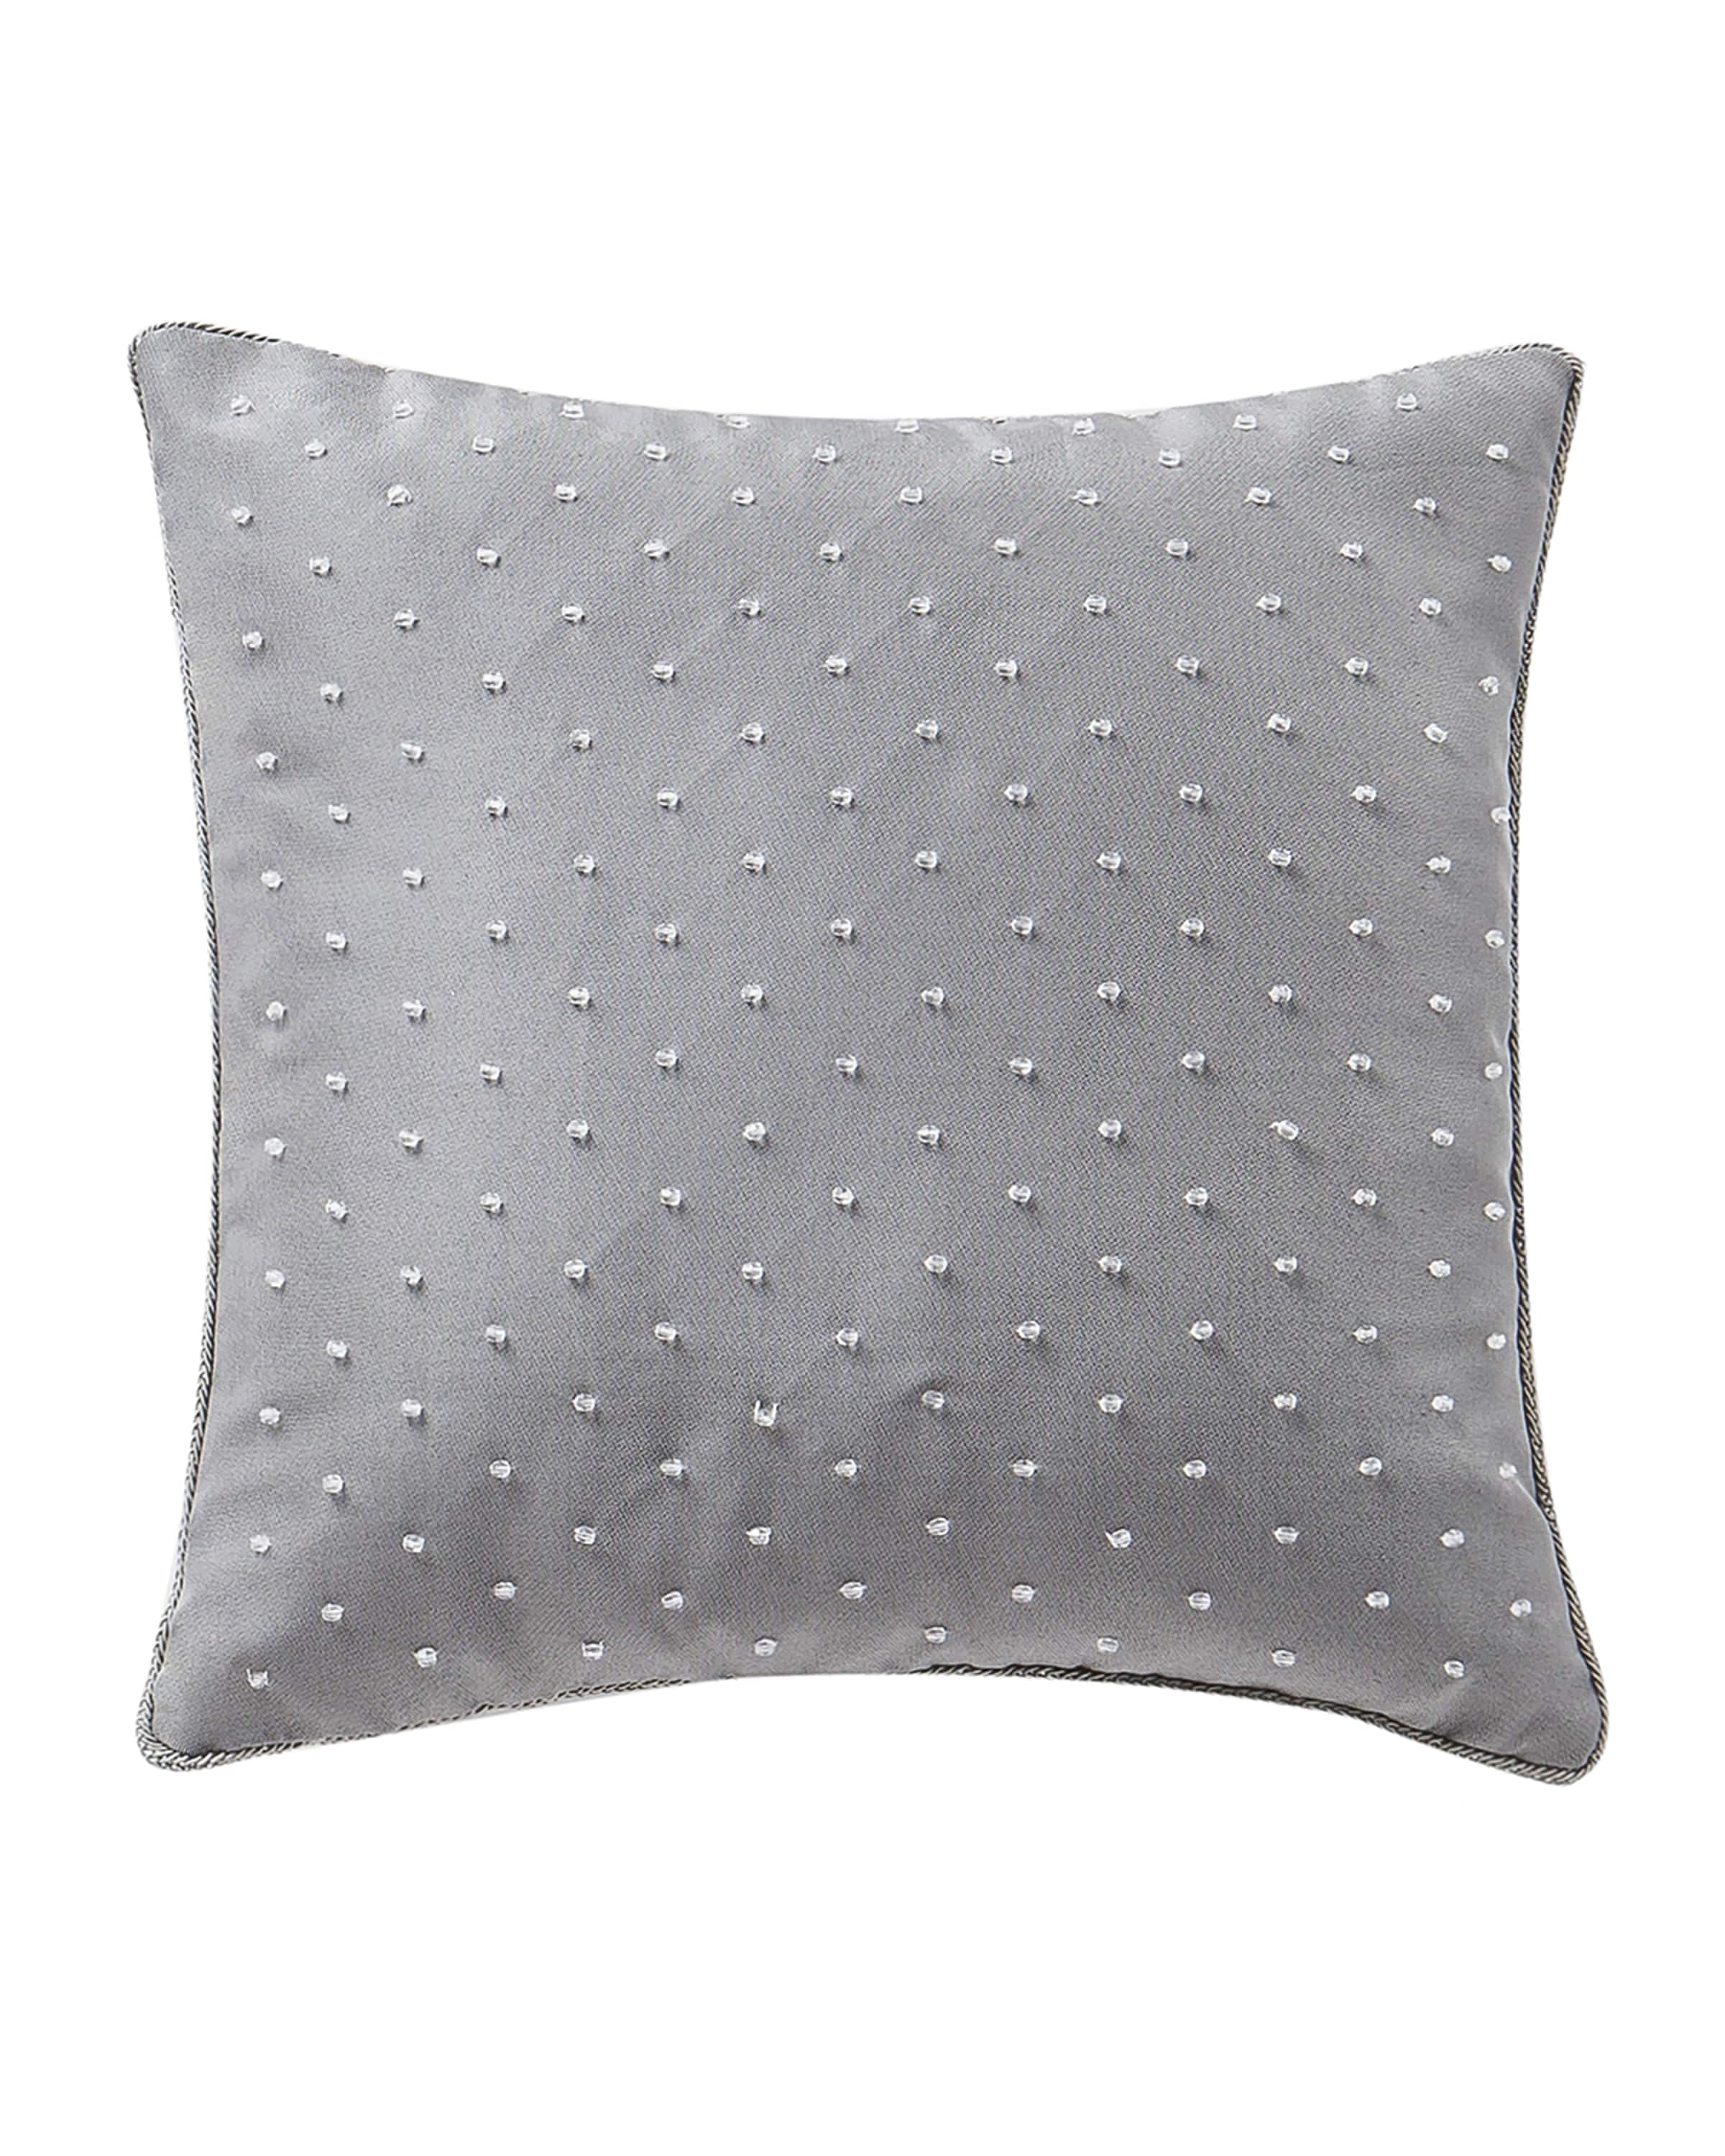 Waterford Farrah Square Decorative Pillow, 14"Sq.